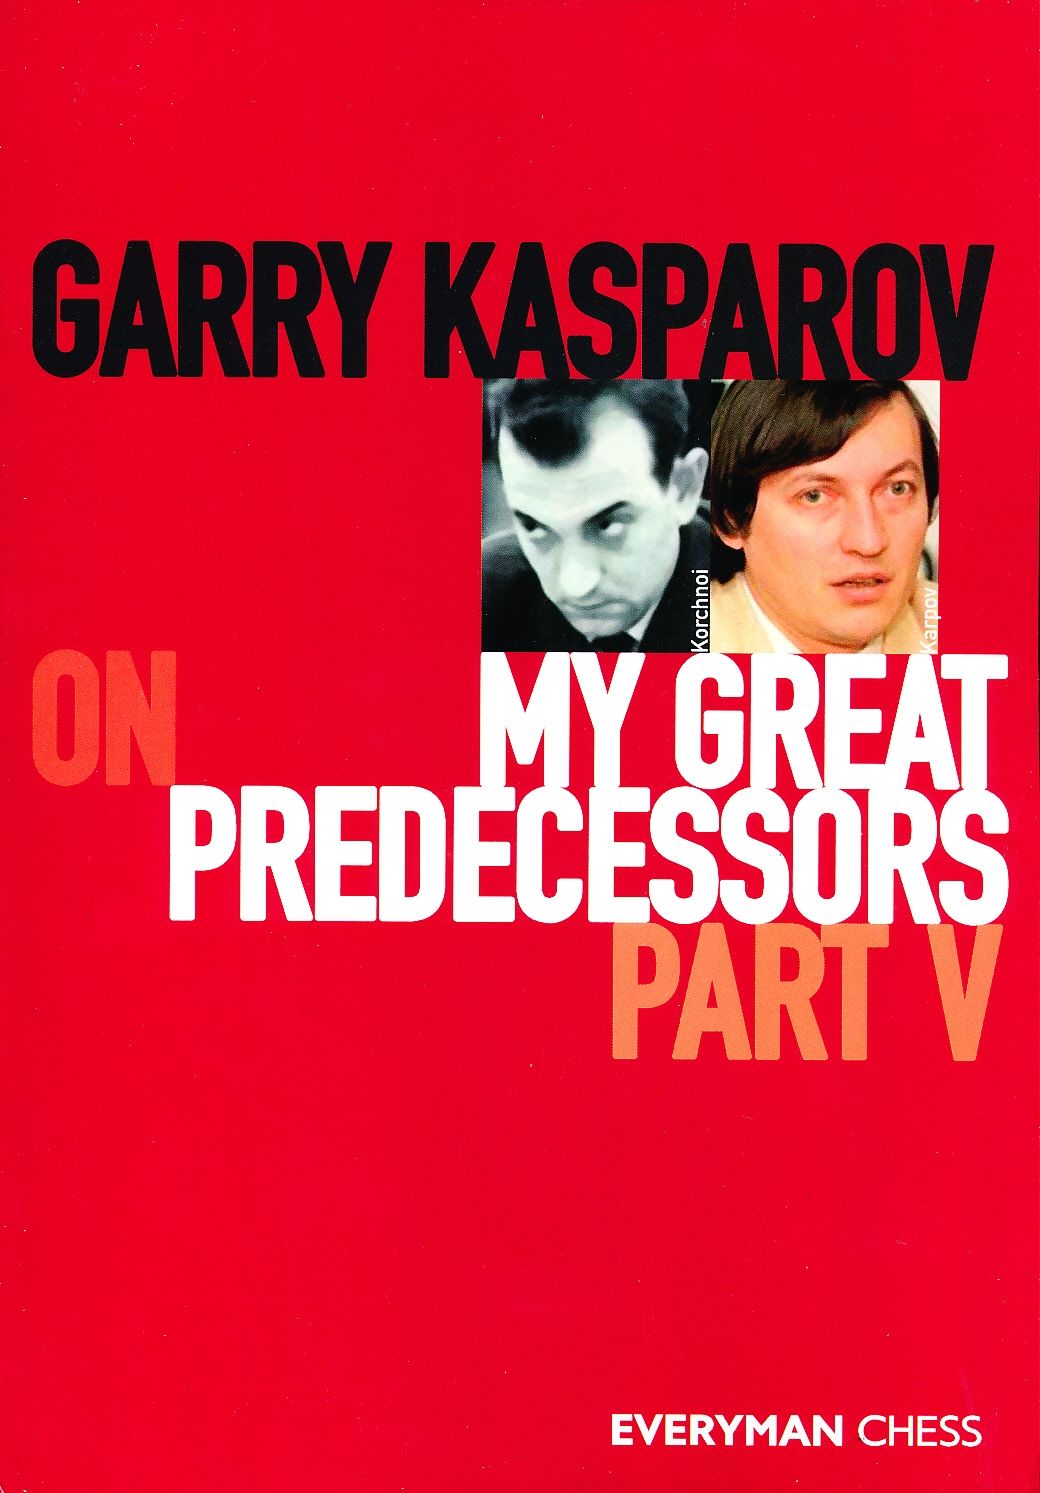 Garry Kasparov on Modern Chess, Part 2: Kasparov Vs Karpov 1975